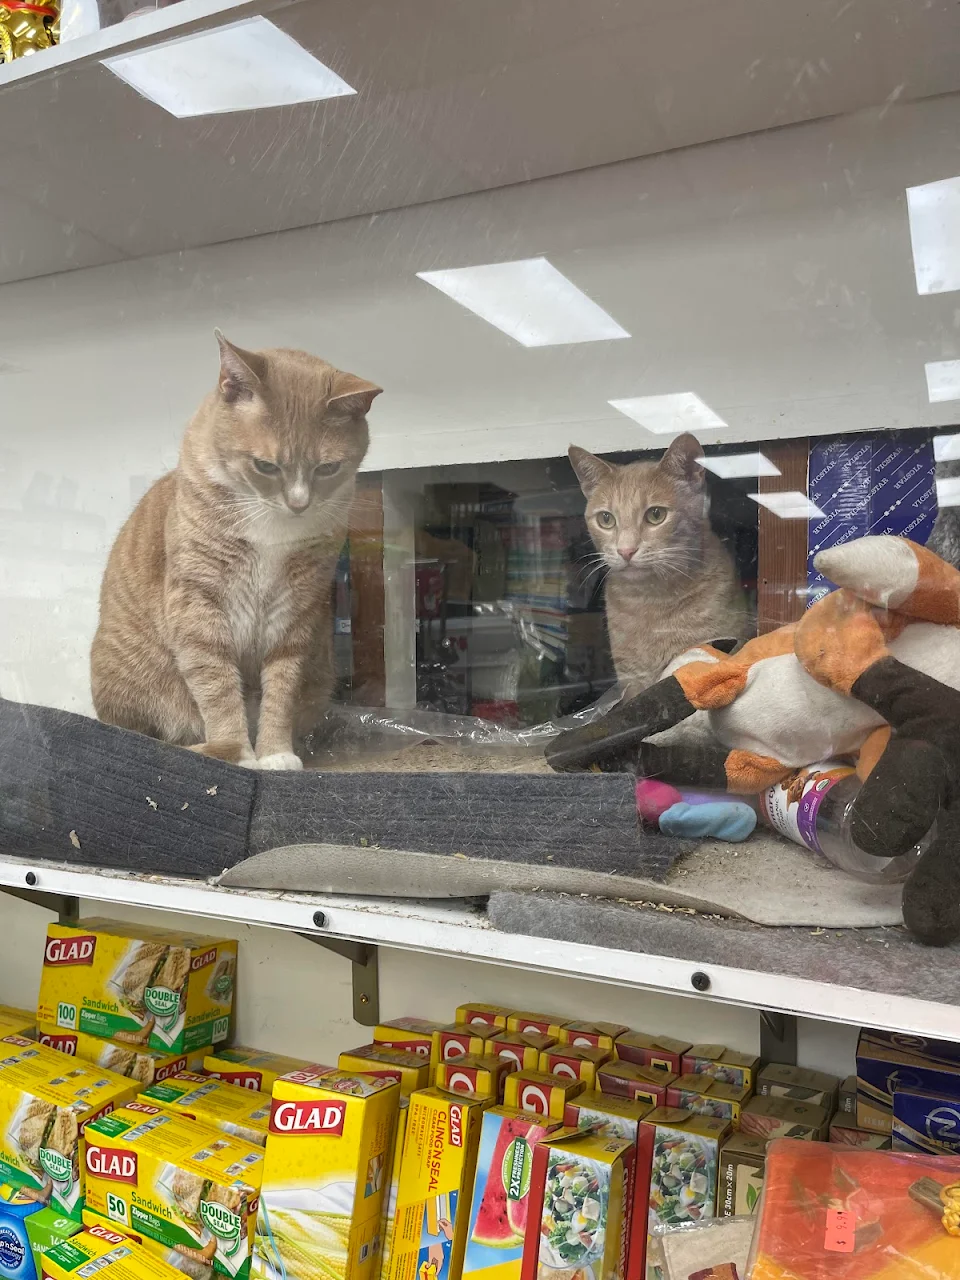 Found a cat den inside a local store!